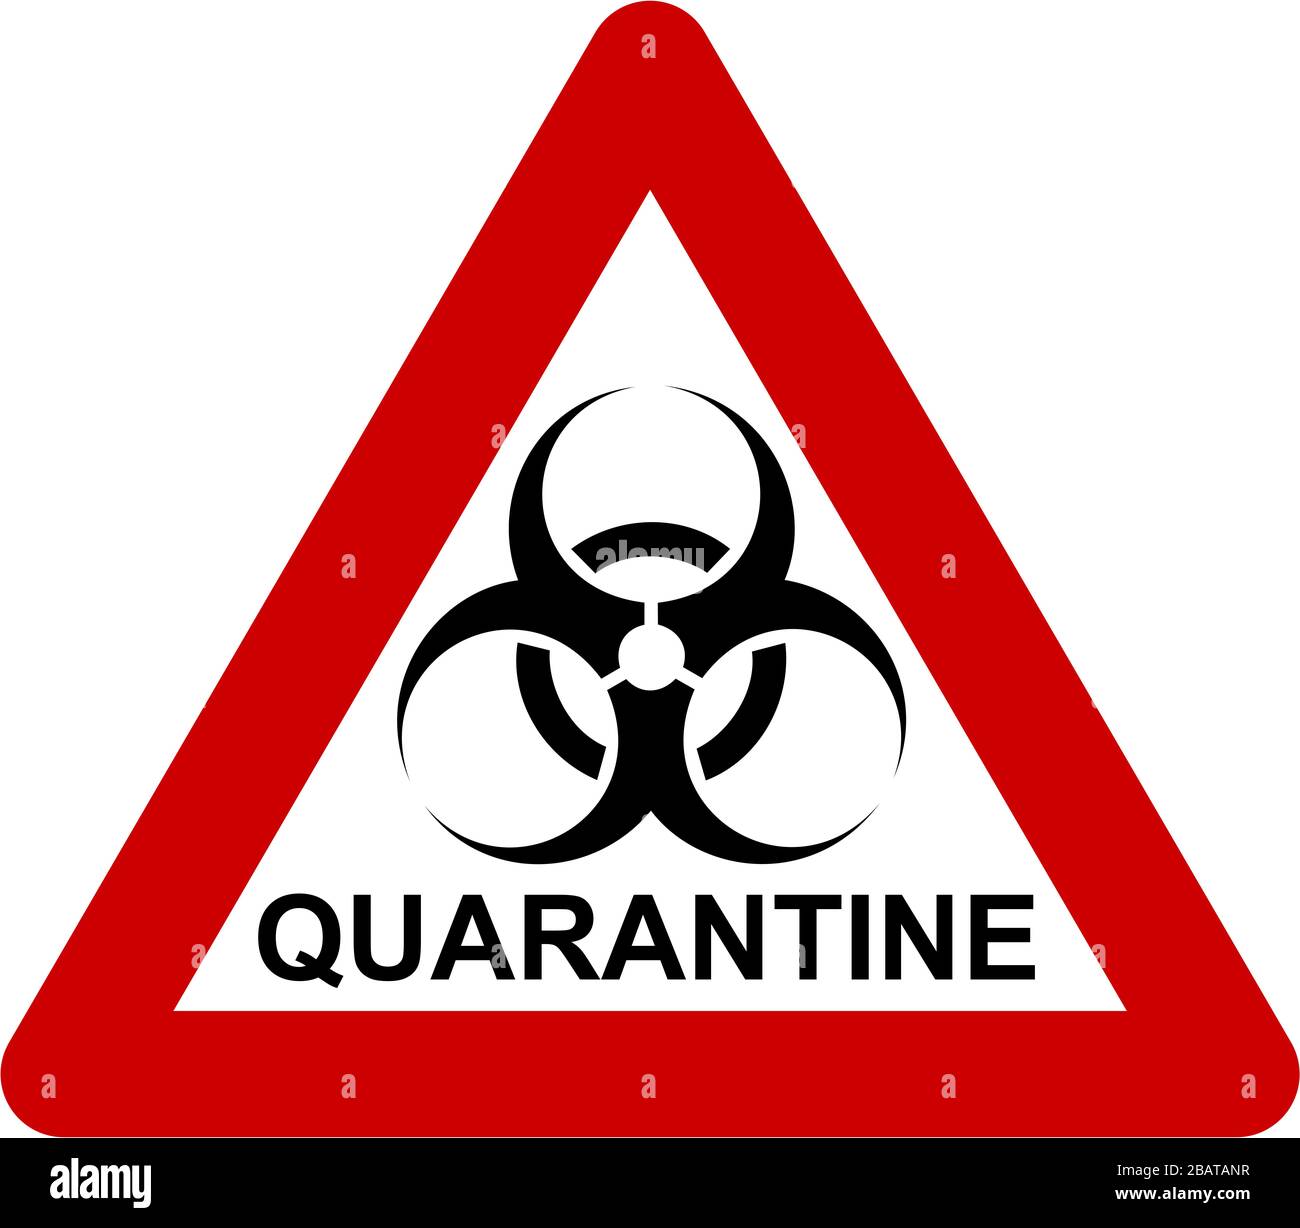 Warning sign with biohazard symbol and QUARANTINE text Stock Photo